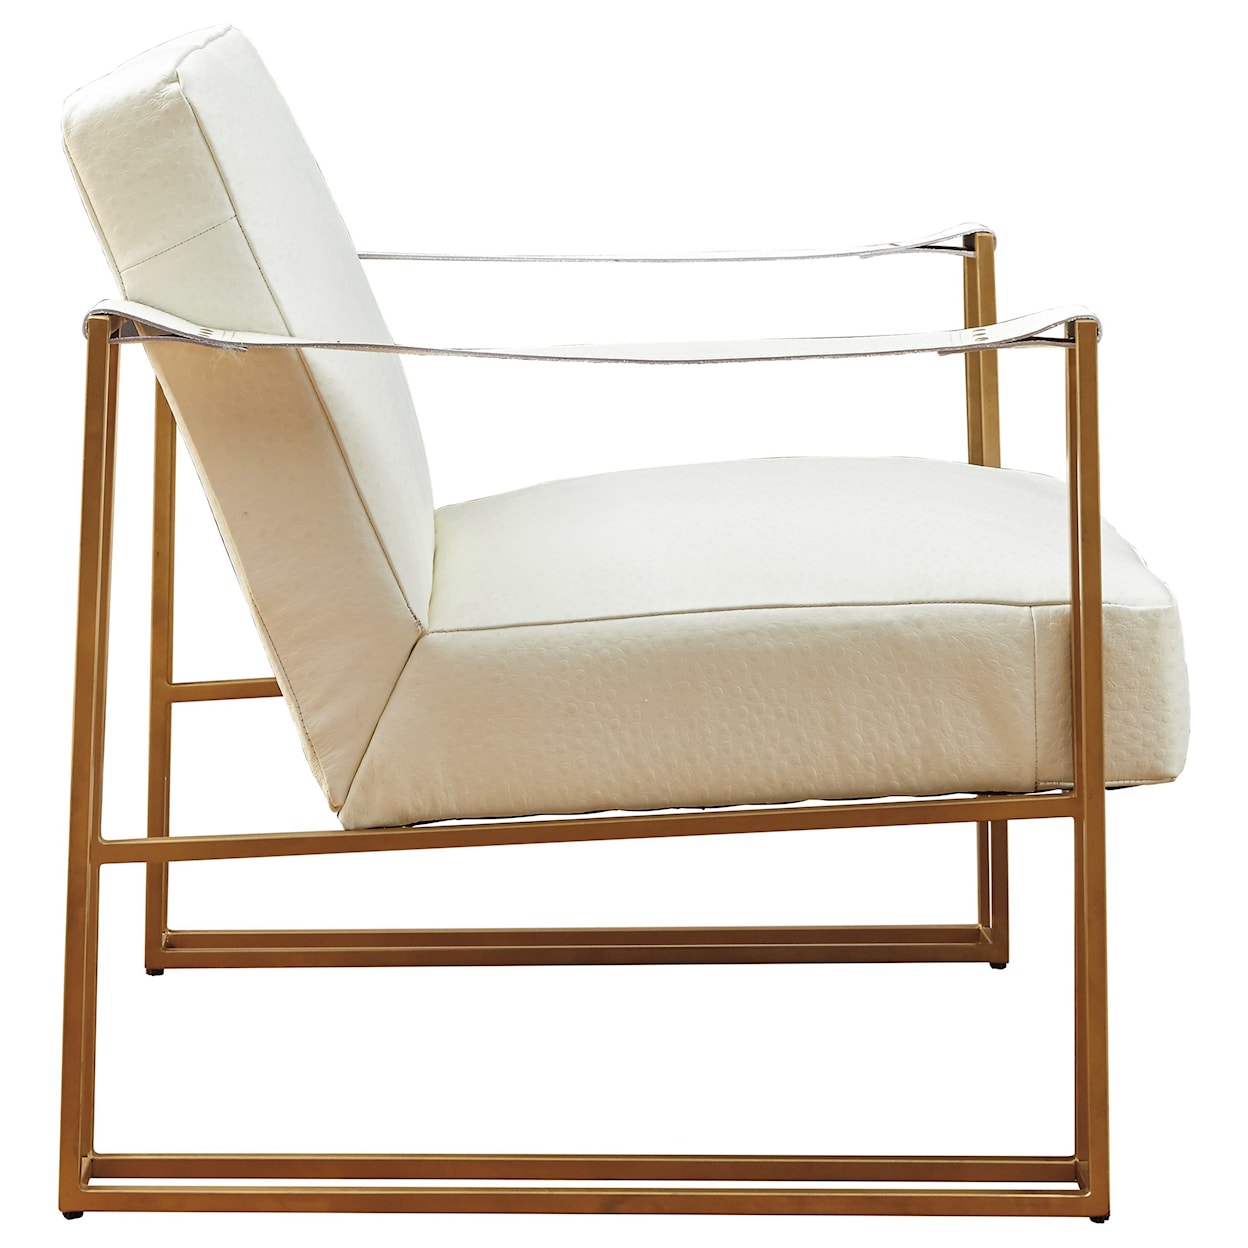 Ashley Furniture Signature Design Kleemore Accent Chair